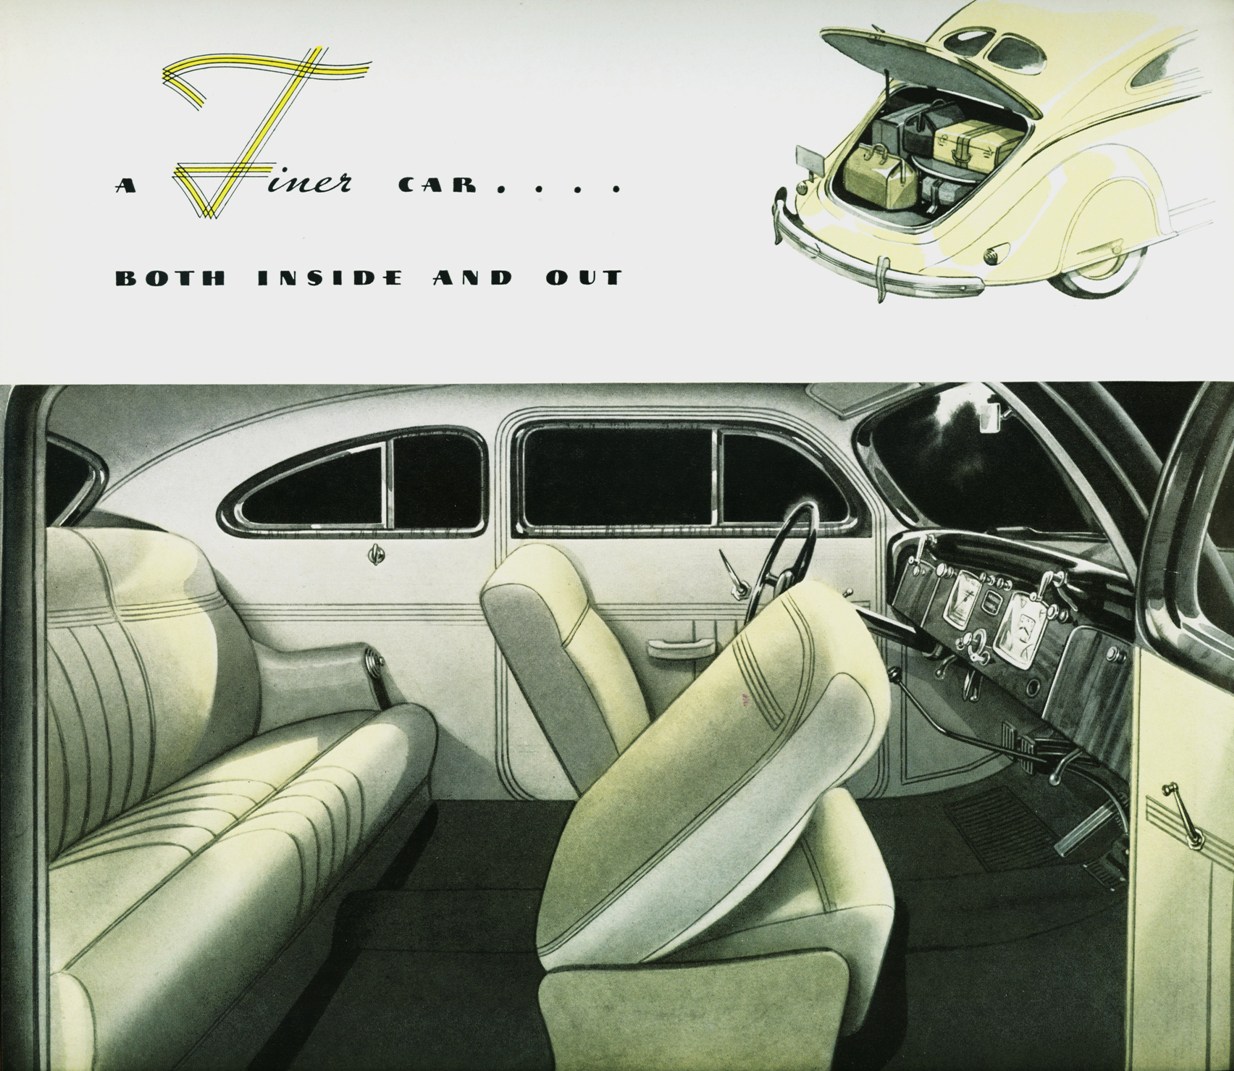 1937 Chrysler airflow